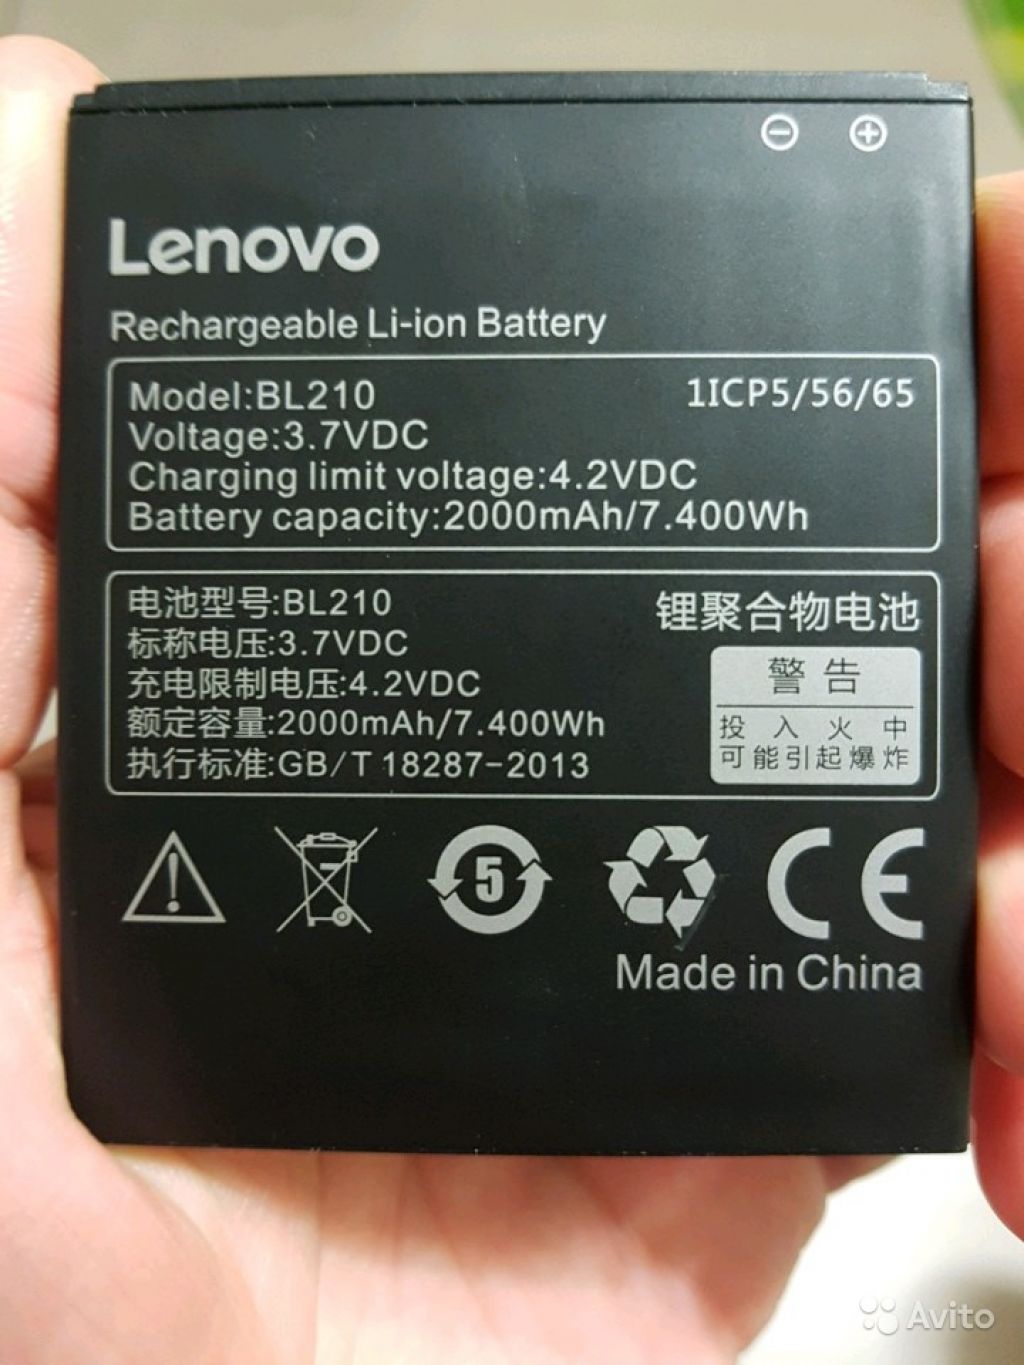 Lenovo battery. Bl210 Размеры. Bl210 аккумулятор размер. Аккумулятор для Lenovo bl210. Bl210 для Lenovo купить.